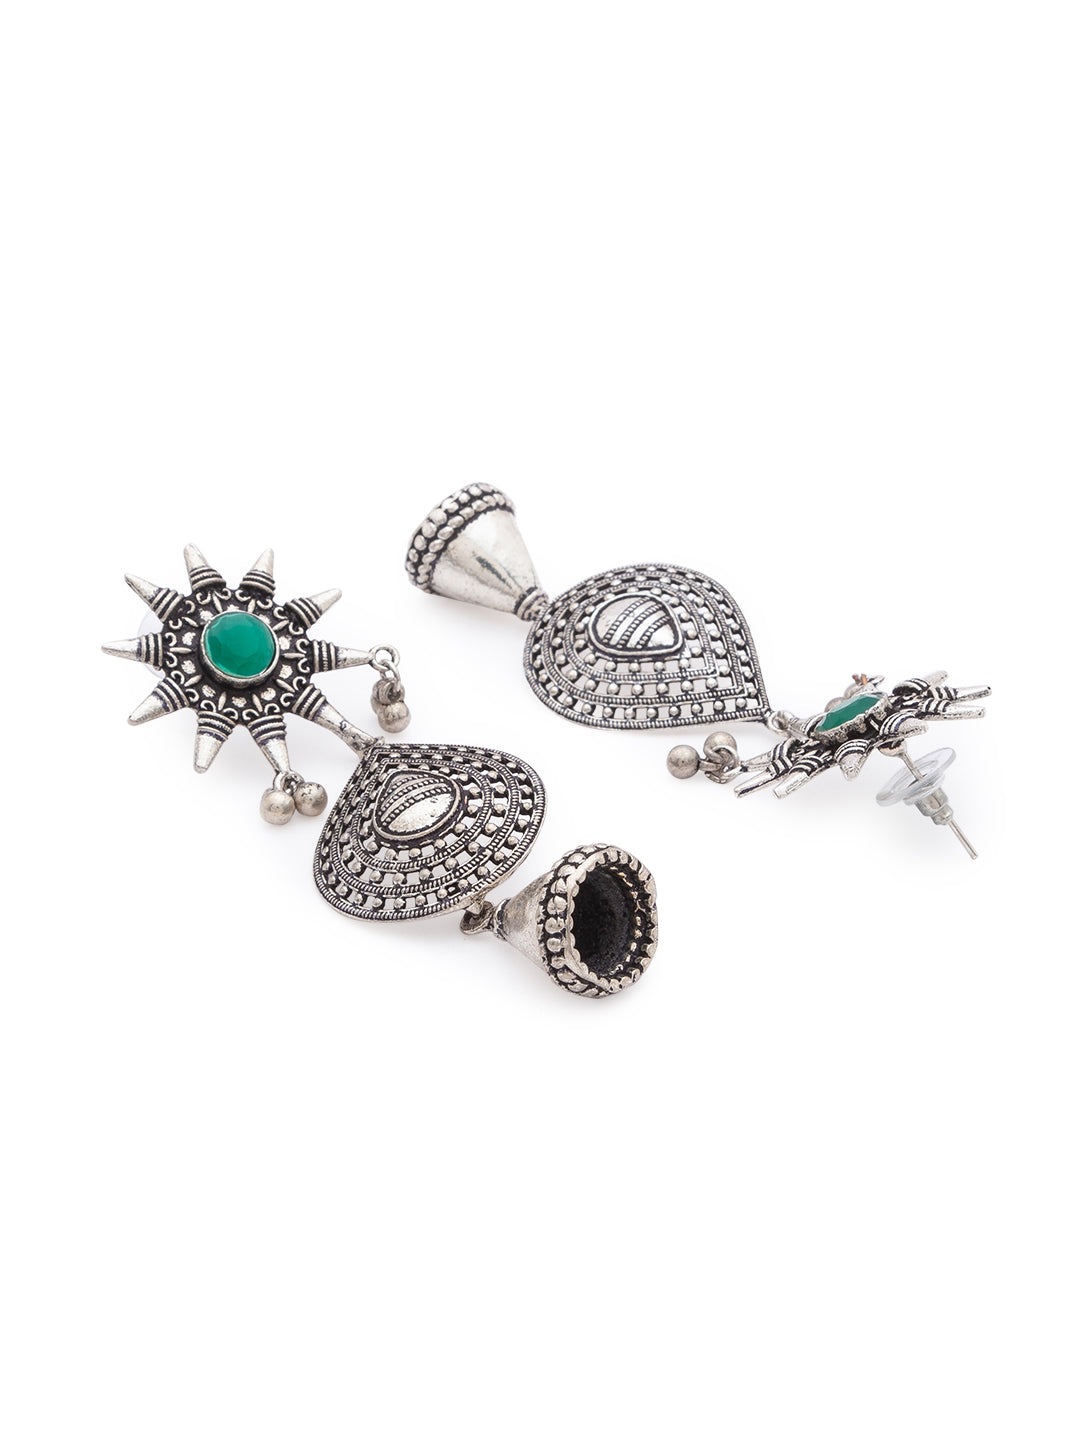 German Oxidized Silver Earrings Antique Look Ethnic Art Stones Studded Danglers